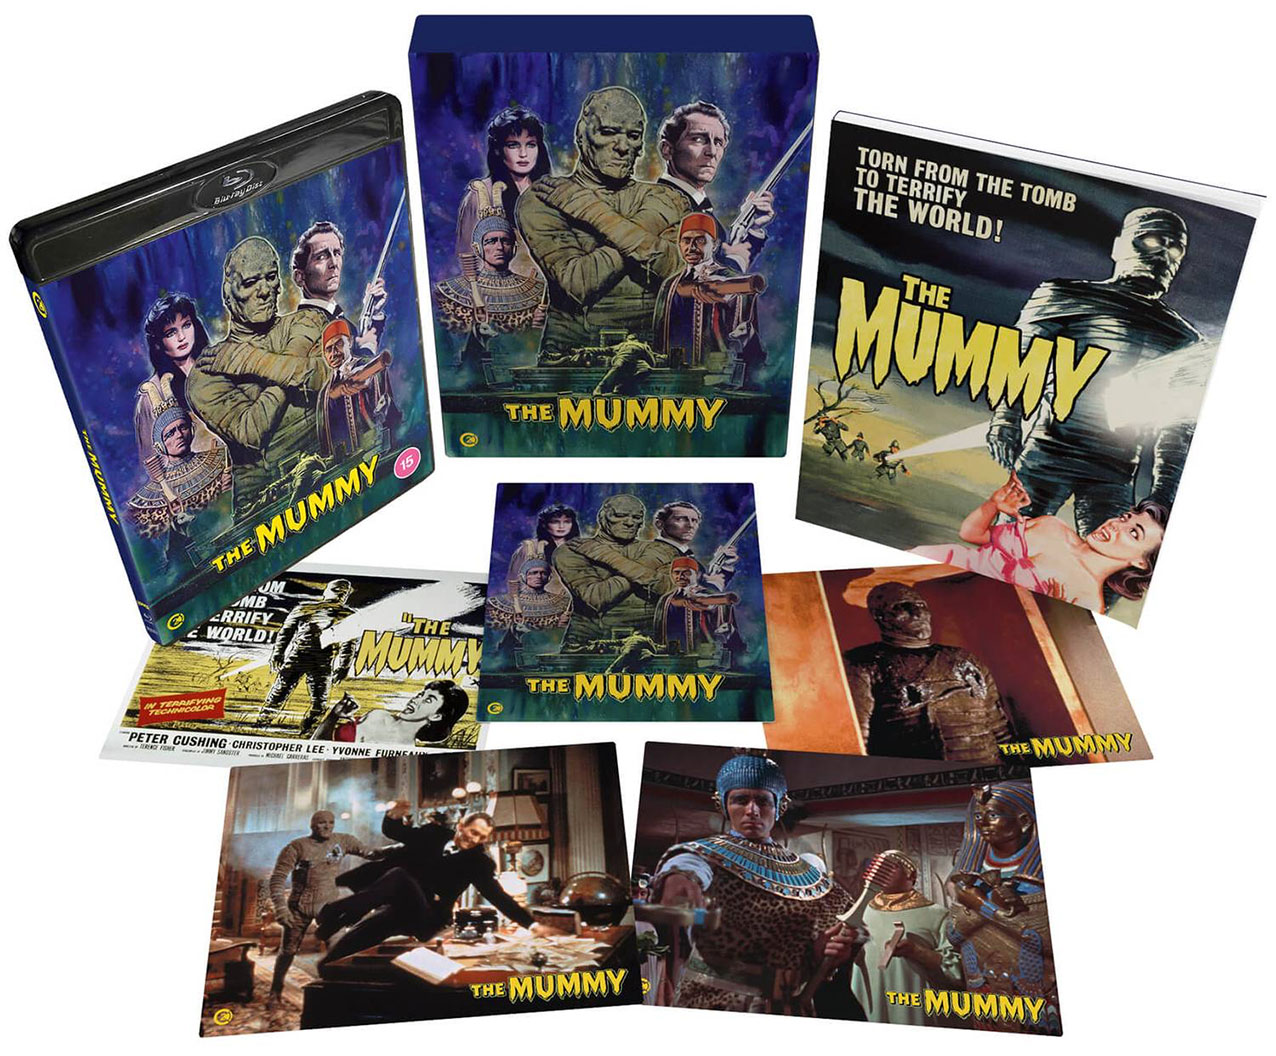 The Mummy Blu-ray pack shot